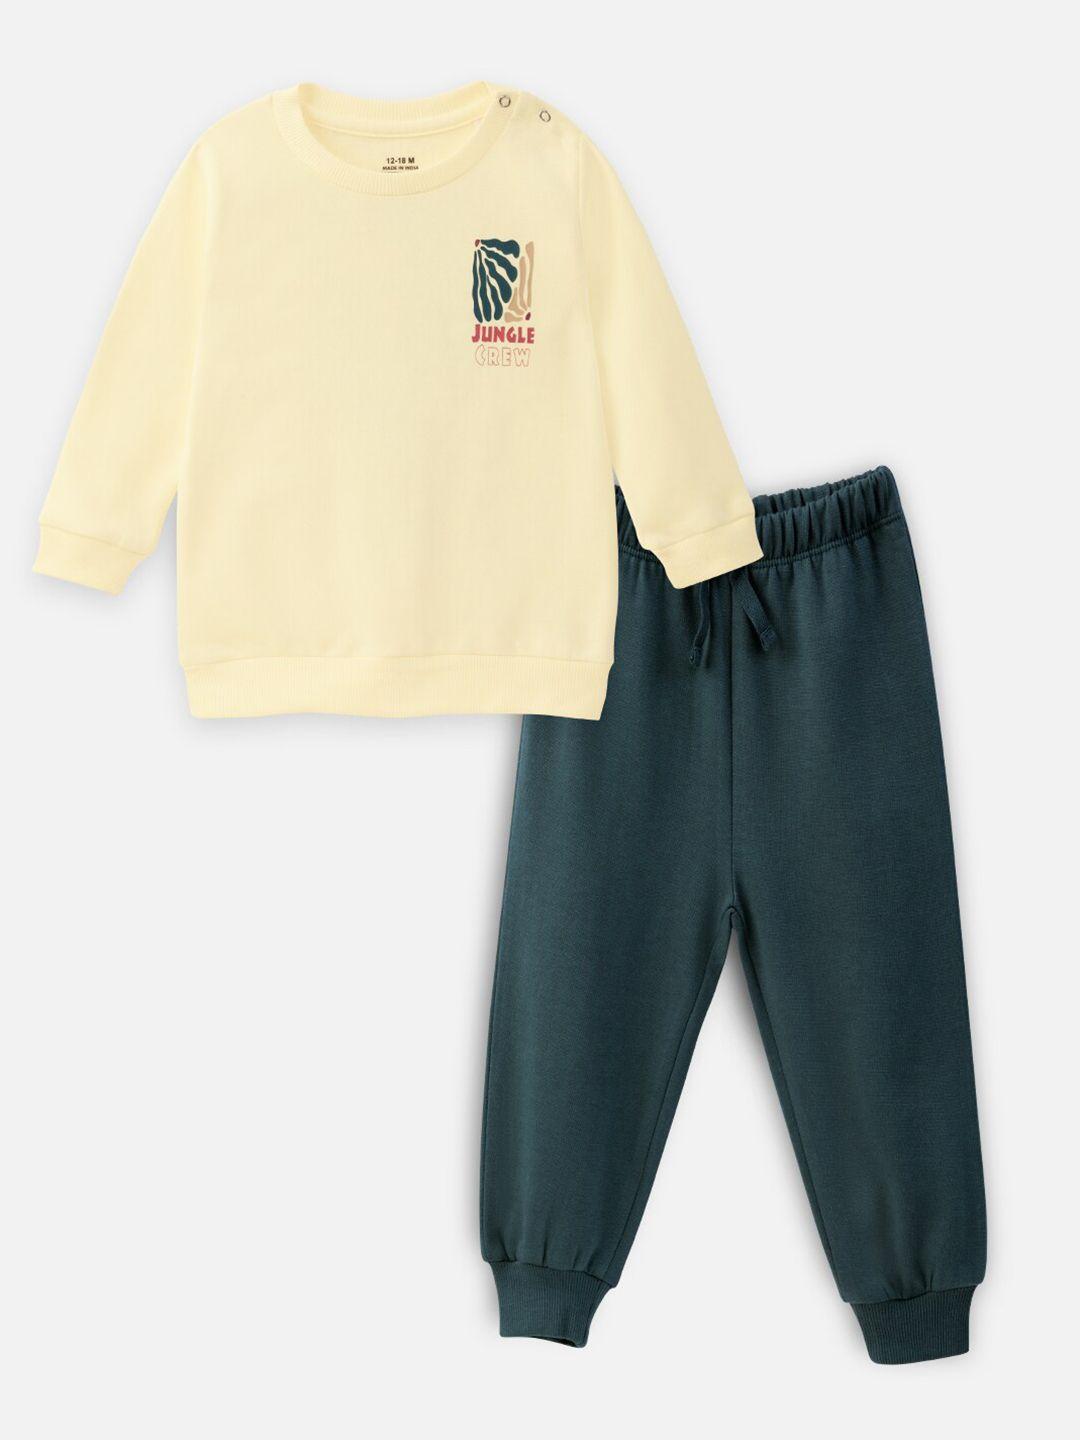 nap chief unisex kids yellow printed t-shirt with pyjamas